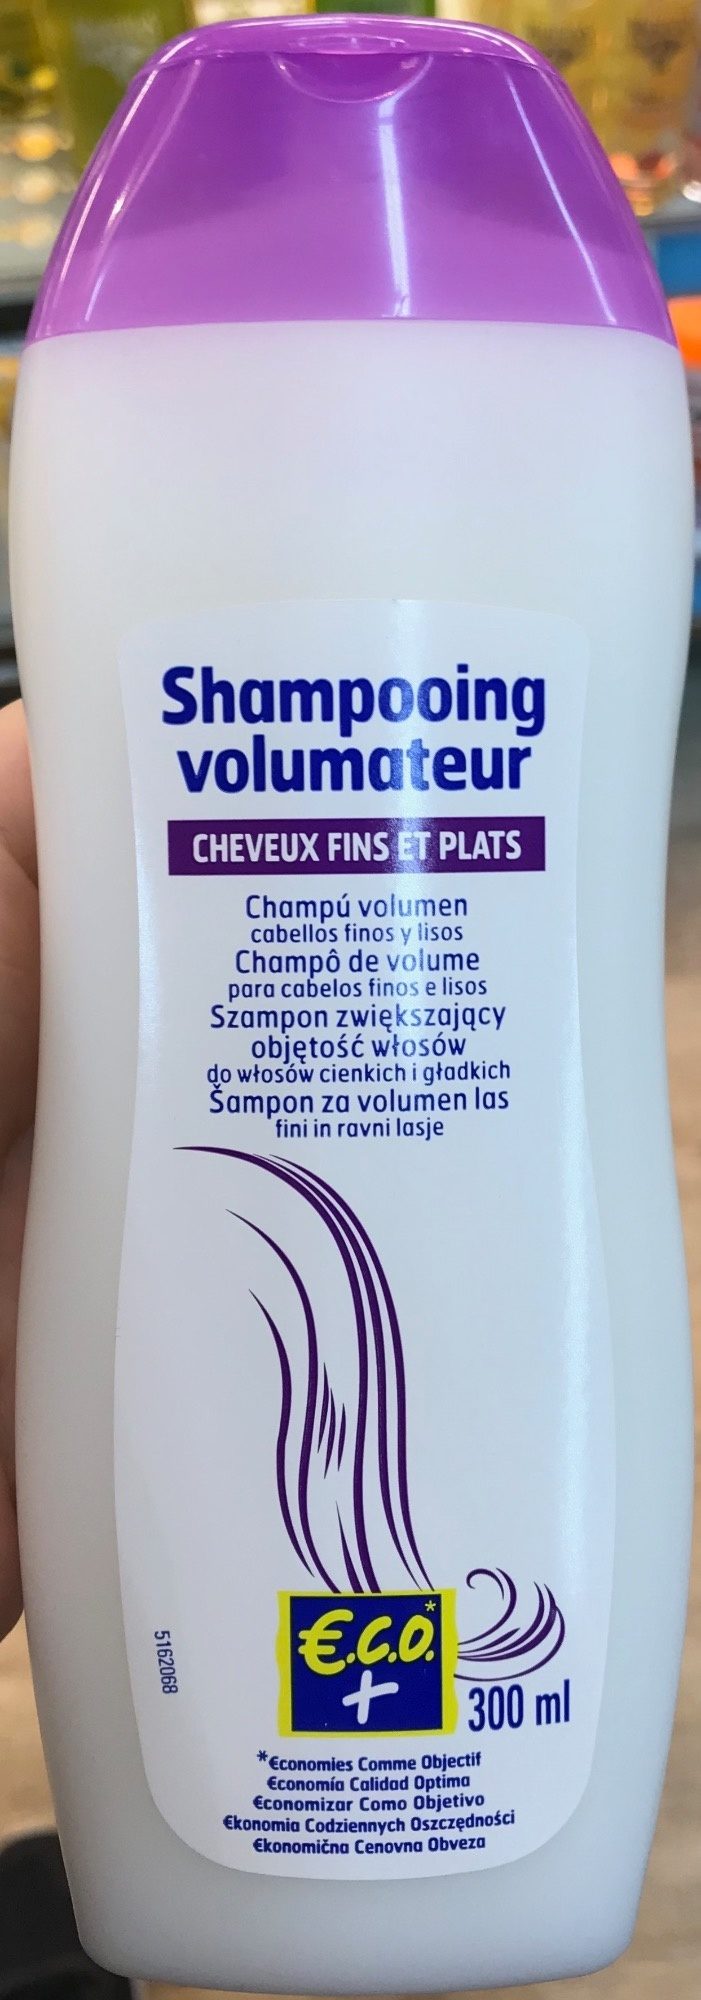 Shampooing volumateur - Produit - fr